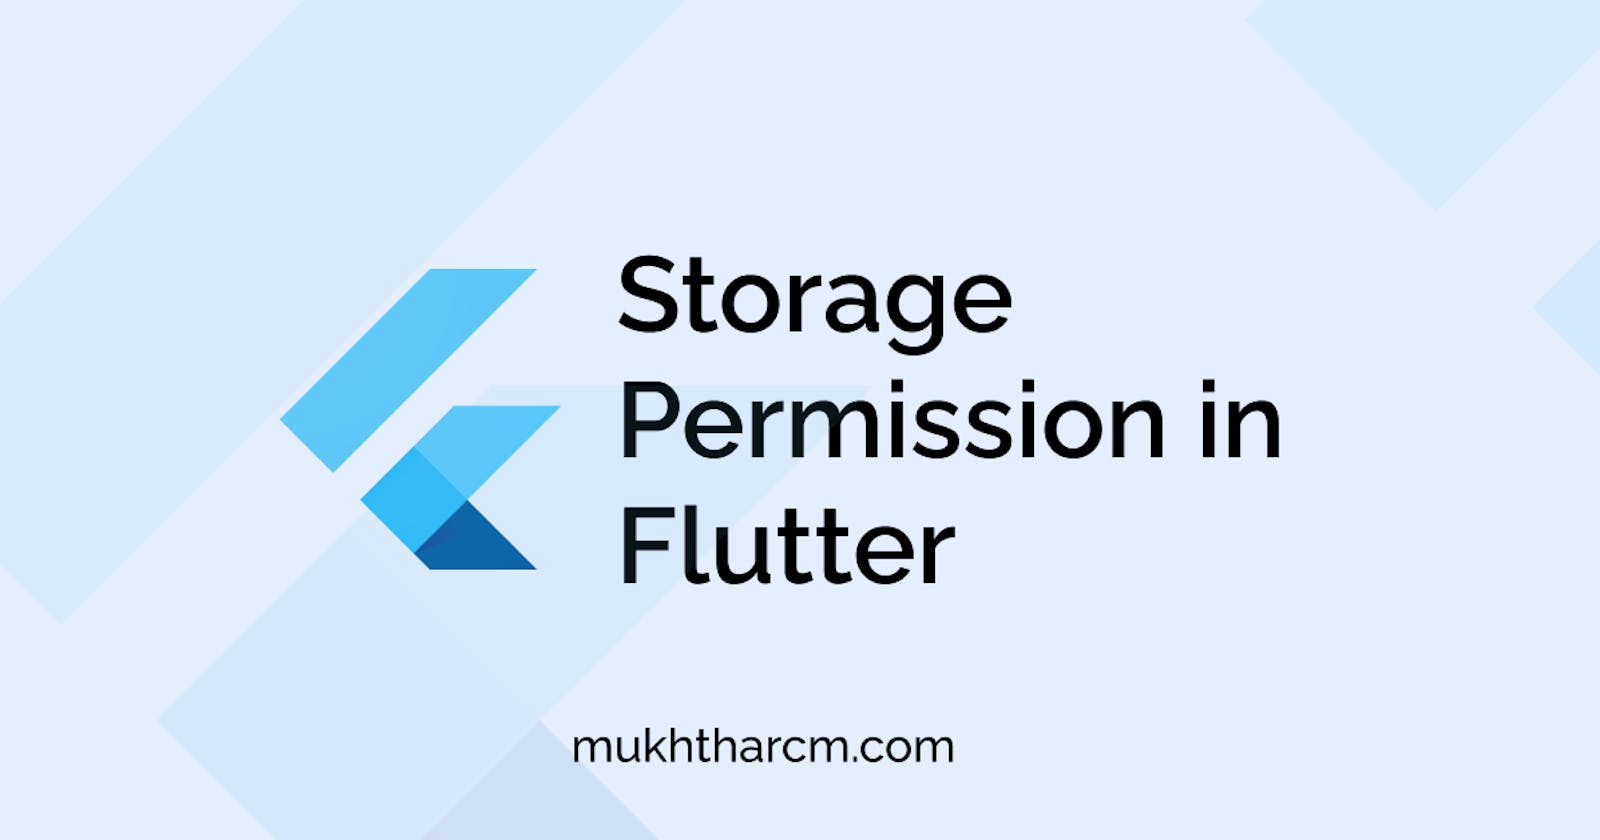 Using Storage Permission in Flutter